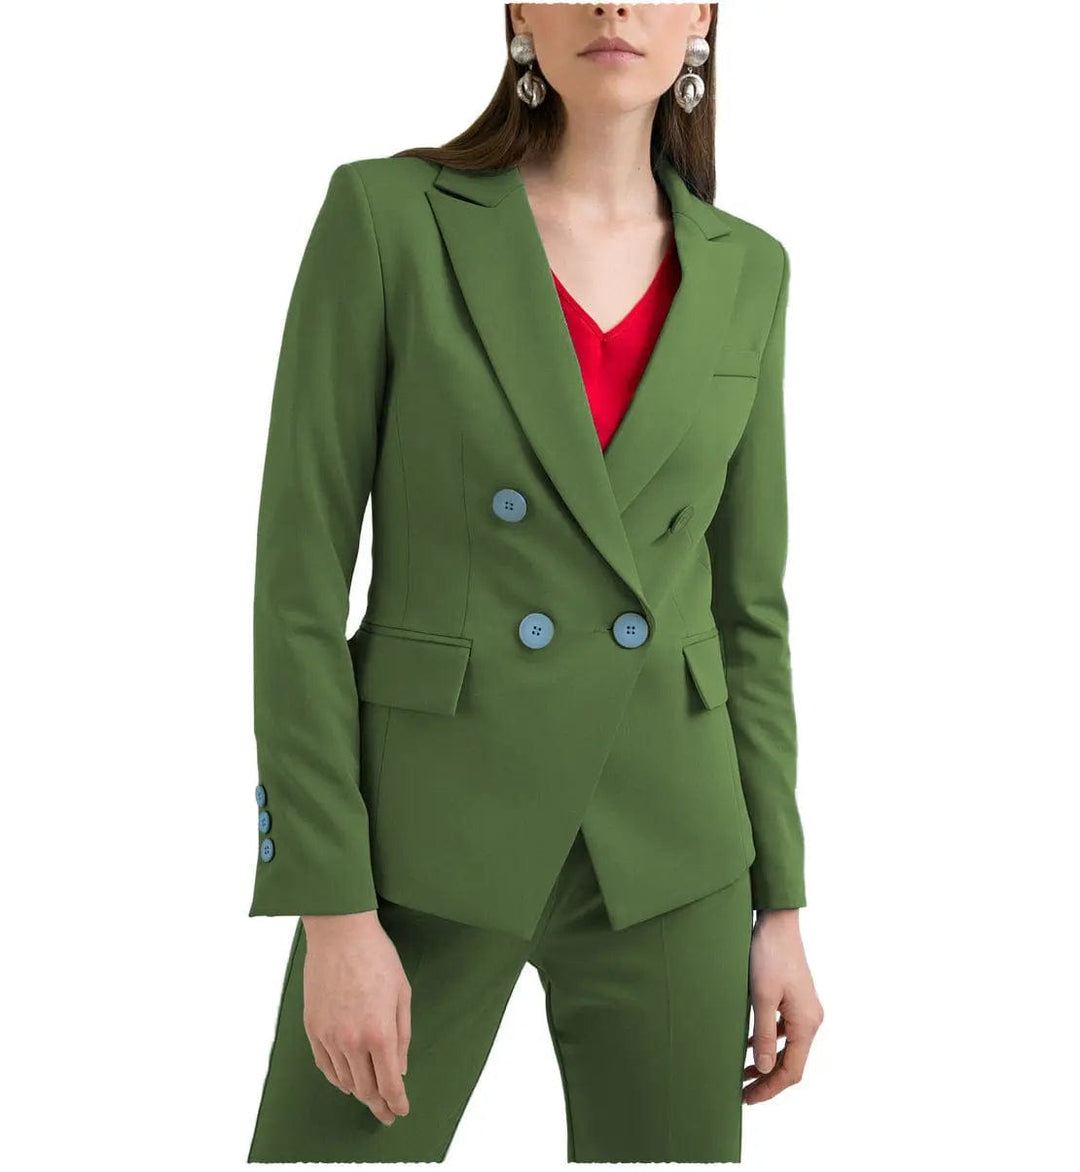 solovedress Formal 2 Pieces Women Suit Flat Peak Lapel Blazer